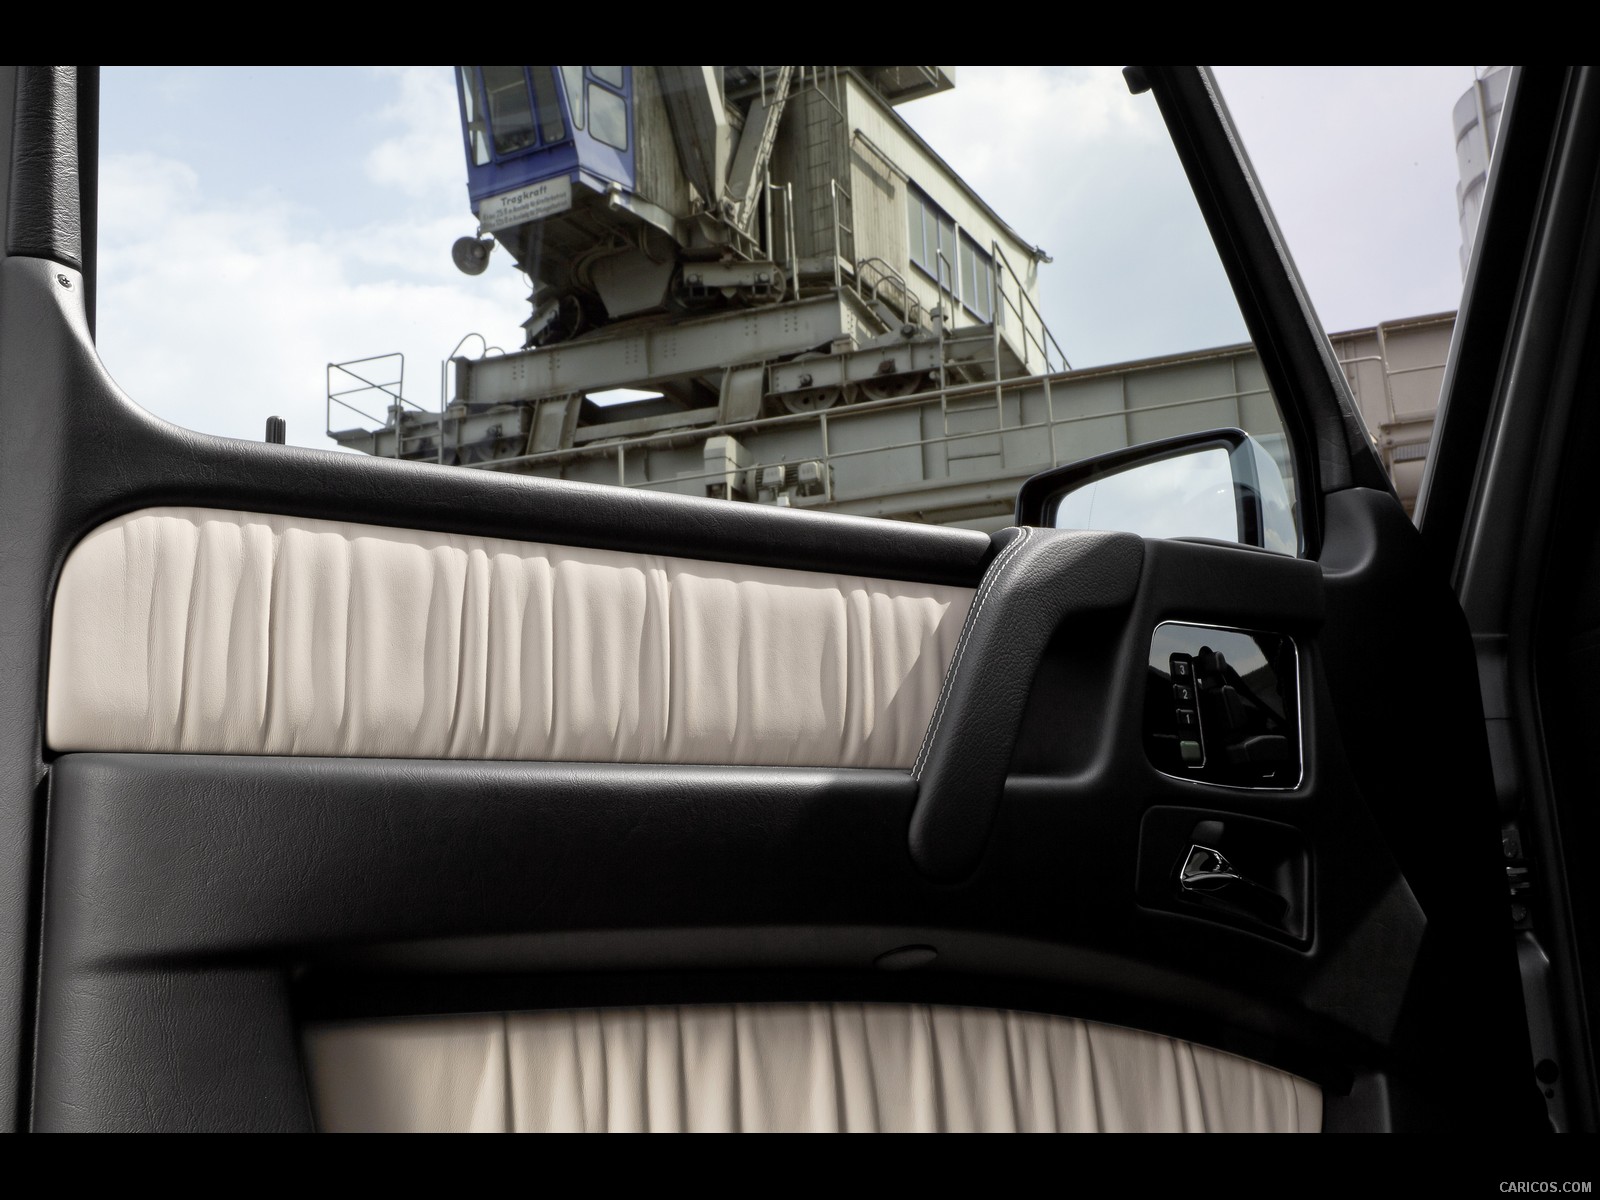 Mercedes-Benz G-Class "Edition Select" (2012)  - Interior, #12 of 13